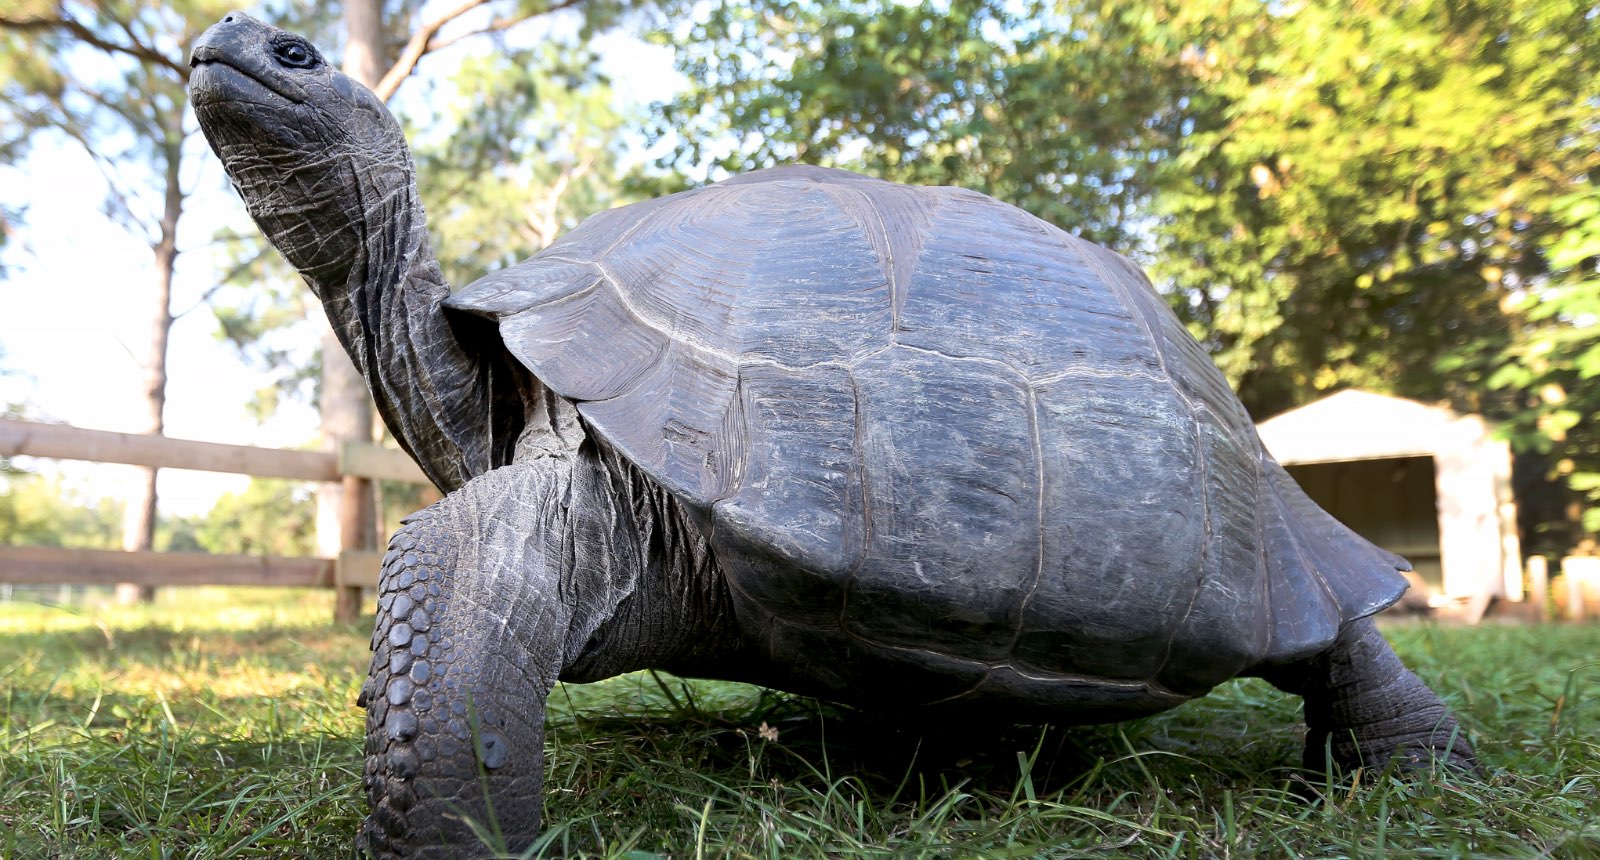 Galapagos tortoise* - Chelonoidis nigra